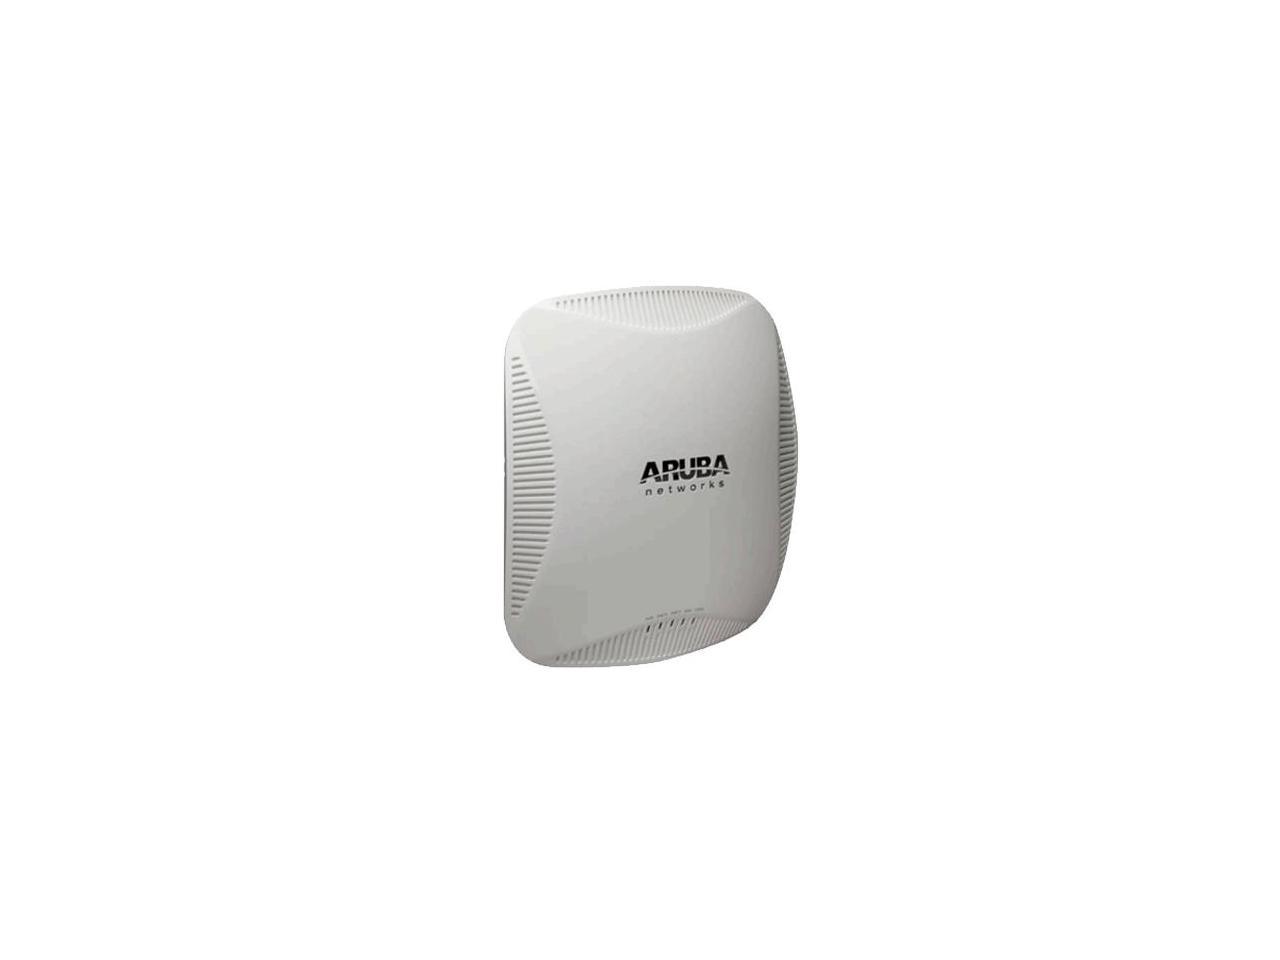 Aruba 220 Instant Wireless Access Point - IAP-225-US 359.99